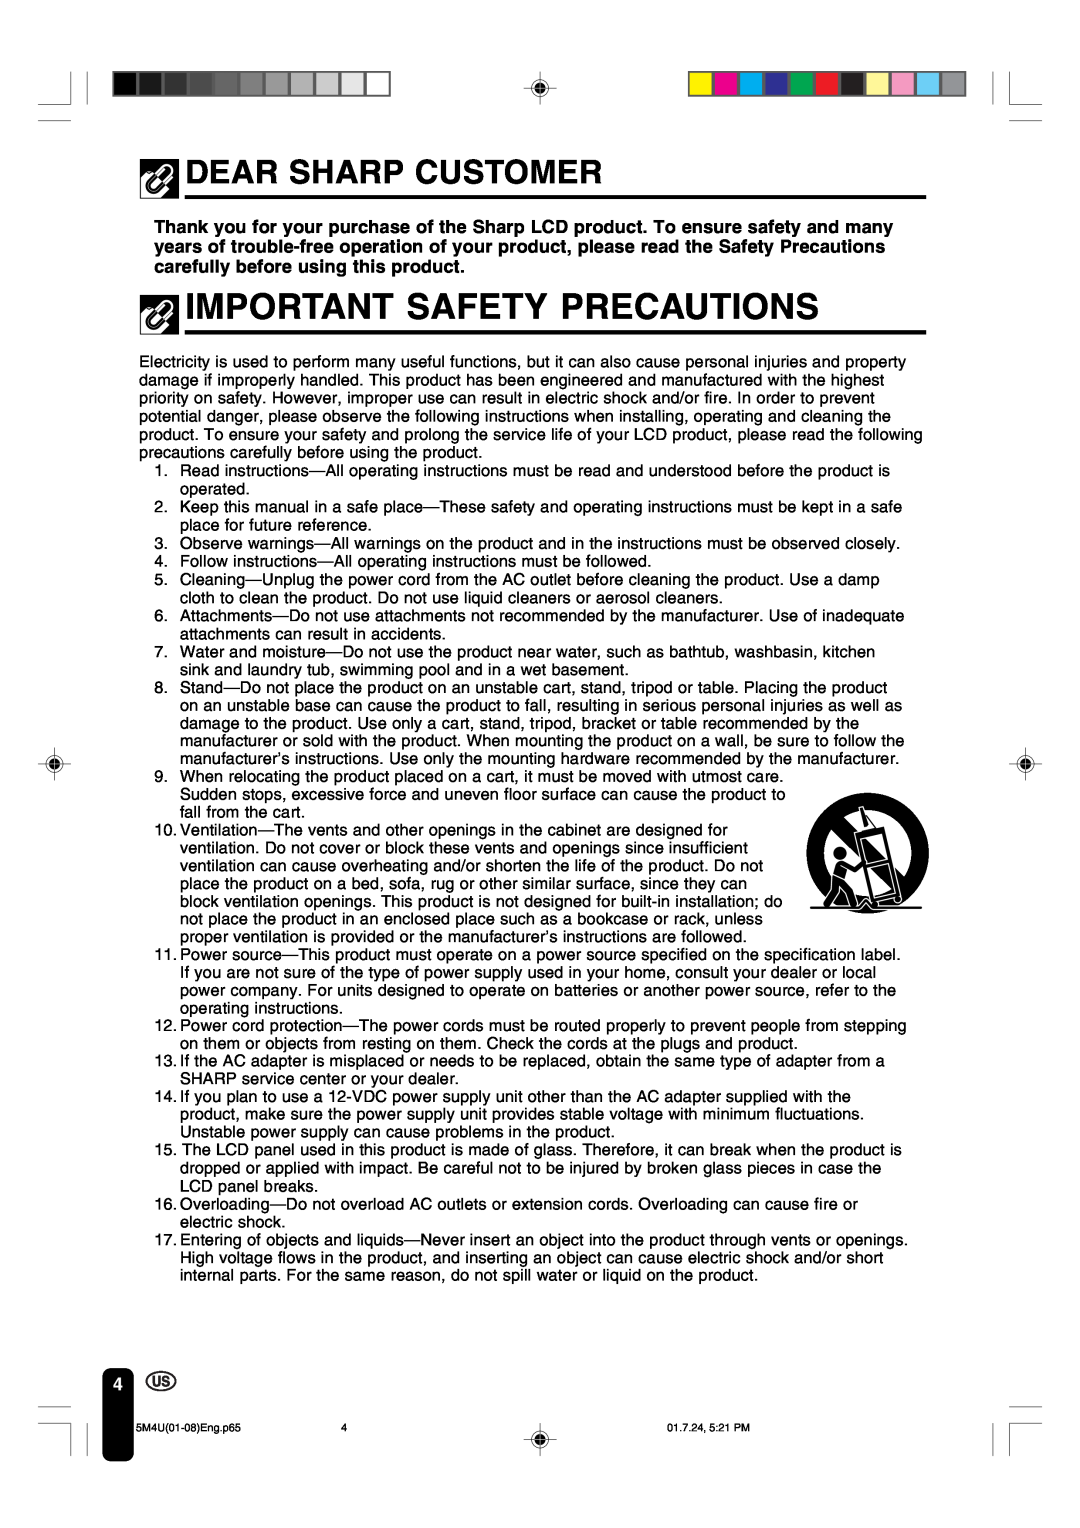 Sharp LC-15M4U operation manual Dear Sharp Customer, Important Safety Precautions 